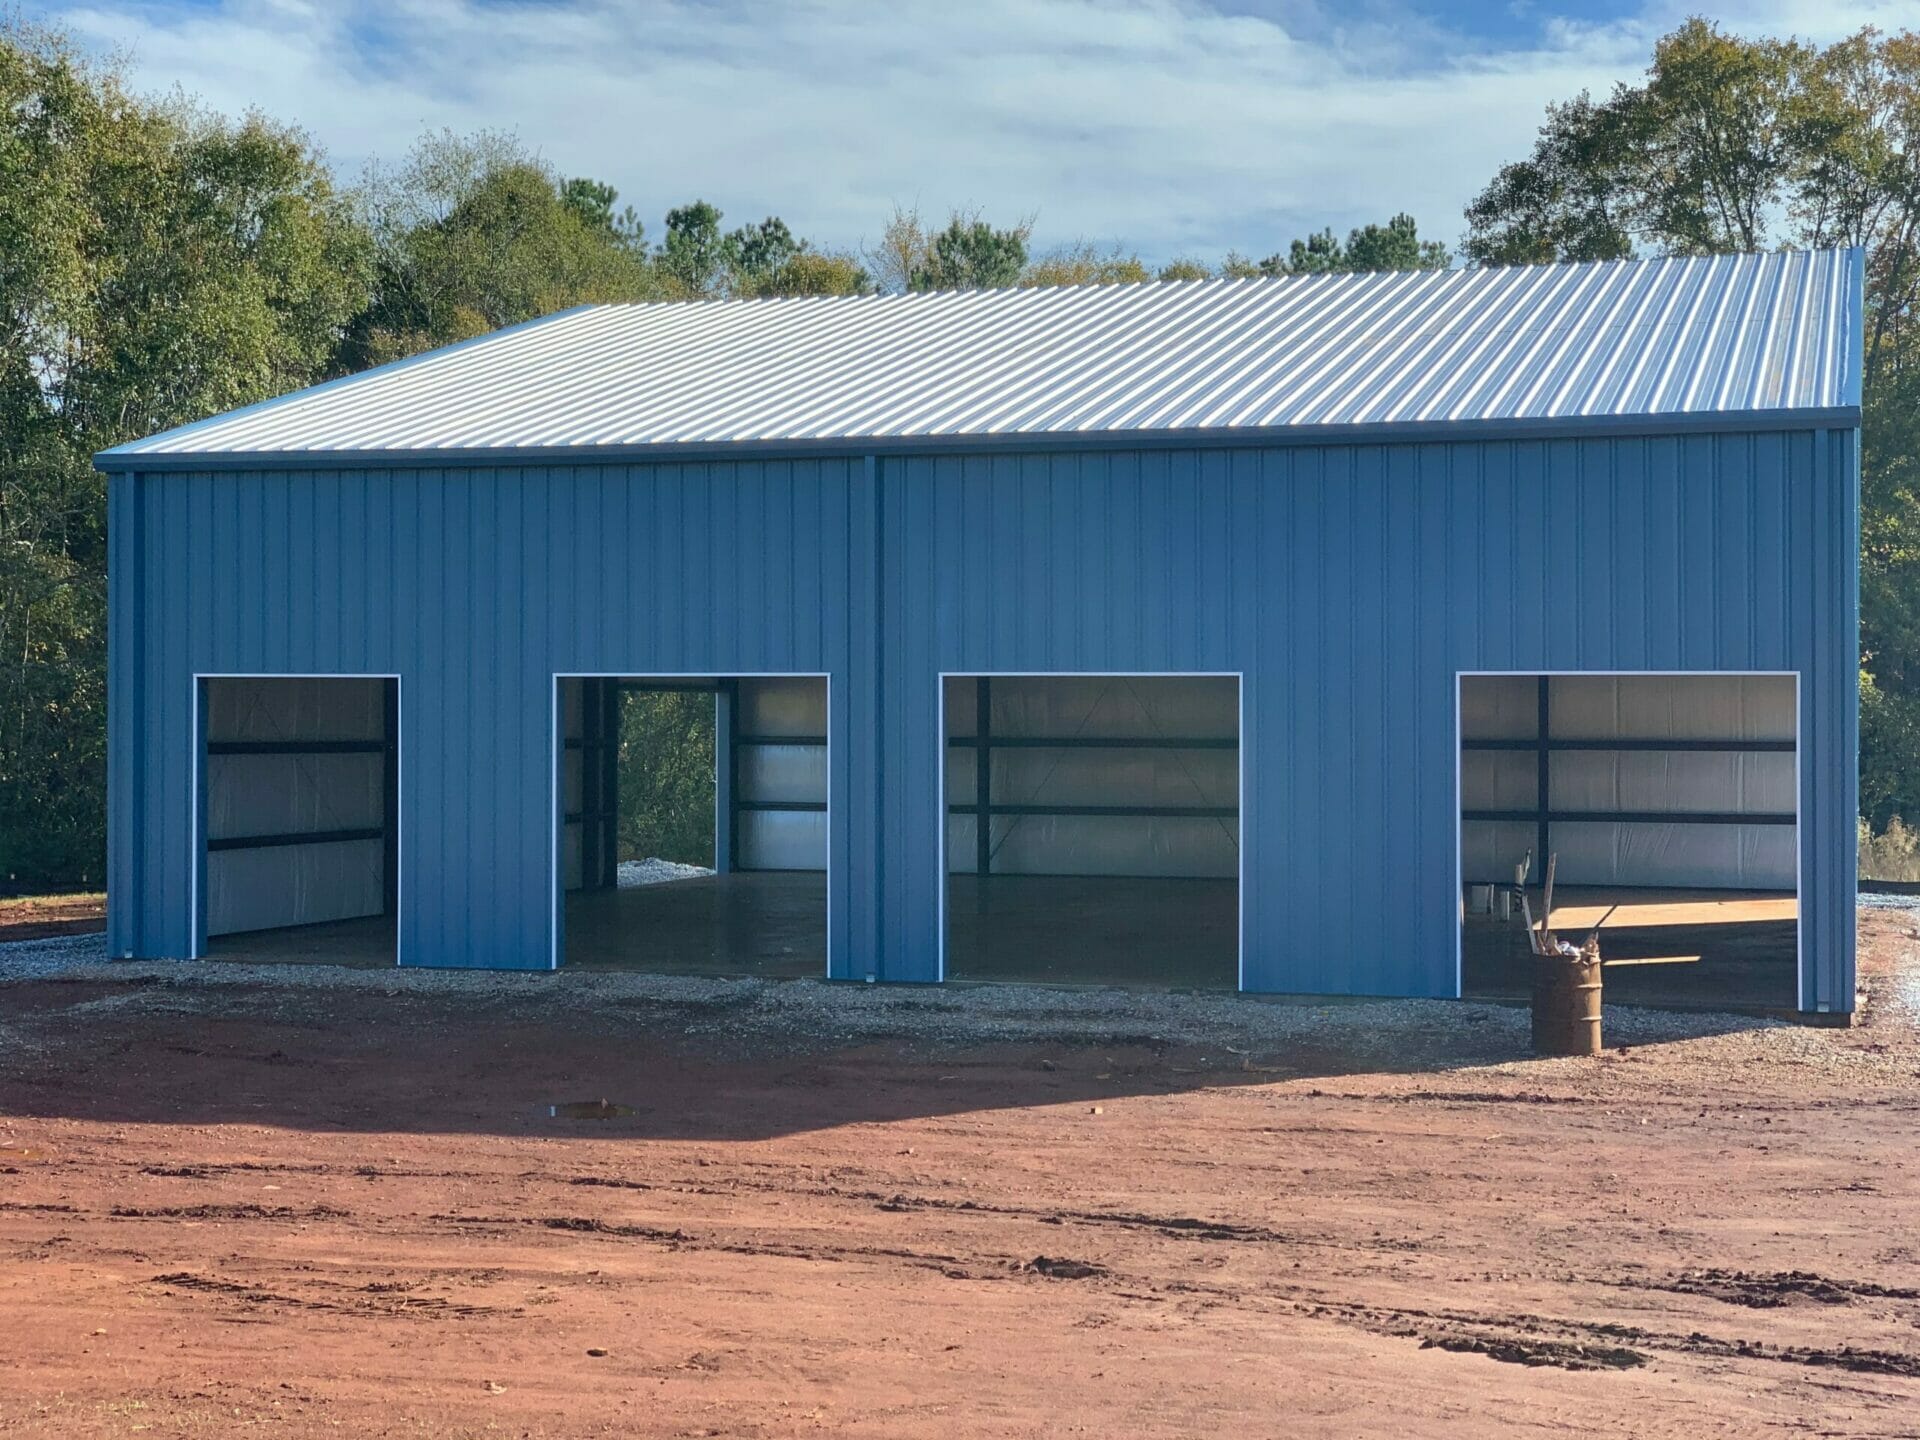 Custom Pre-Engineered Metal Garage Building 5 Bays With Roll Up Garage Doors And Side Entry Door